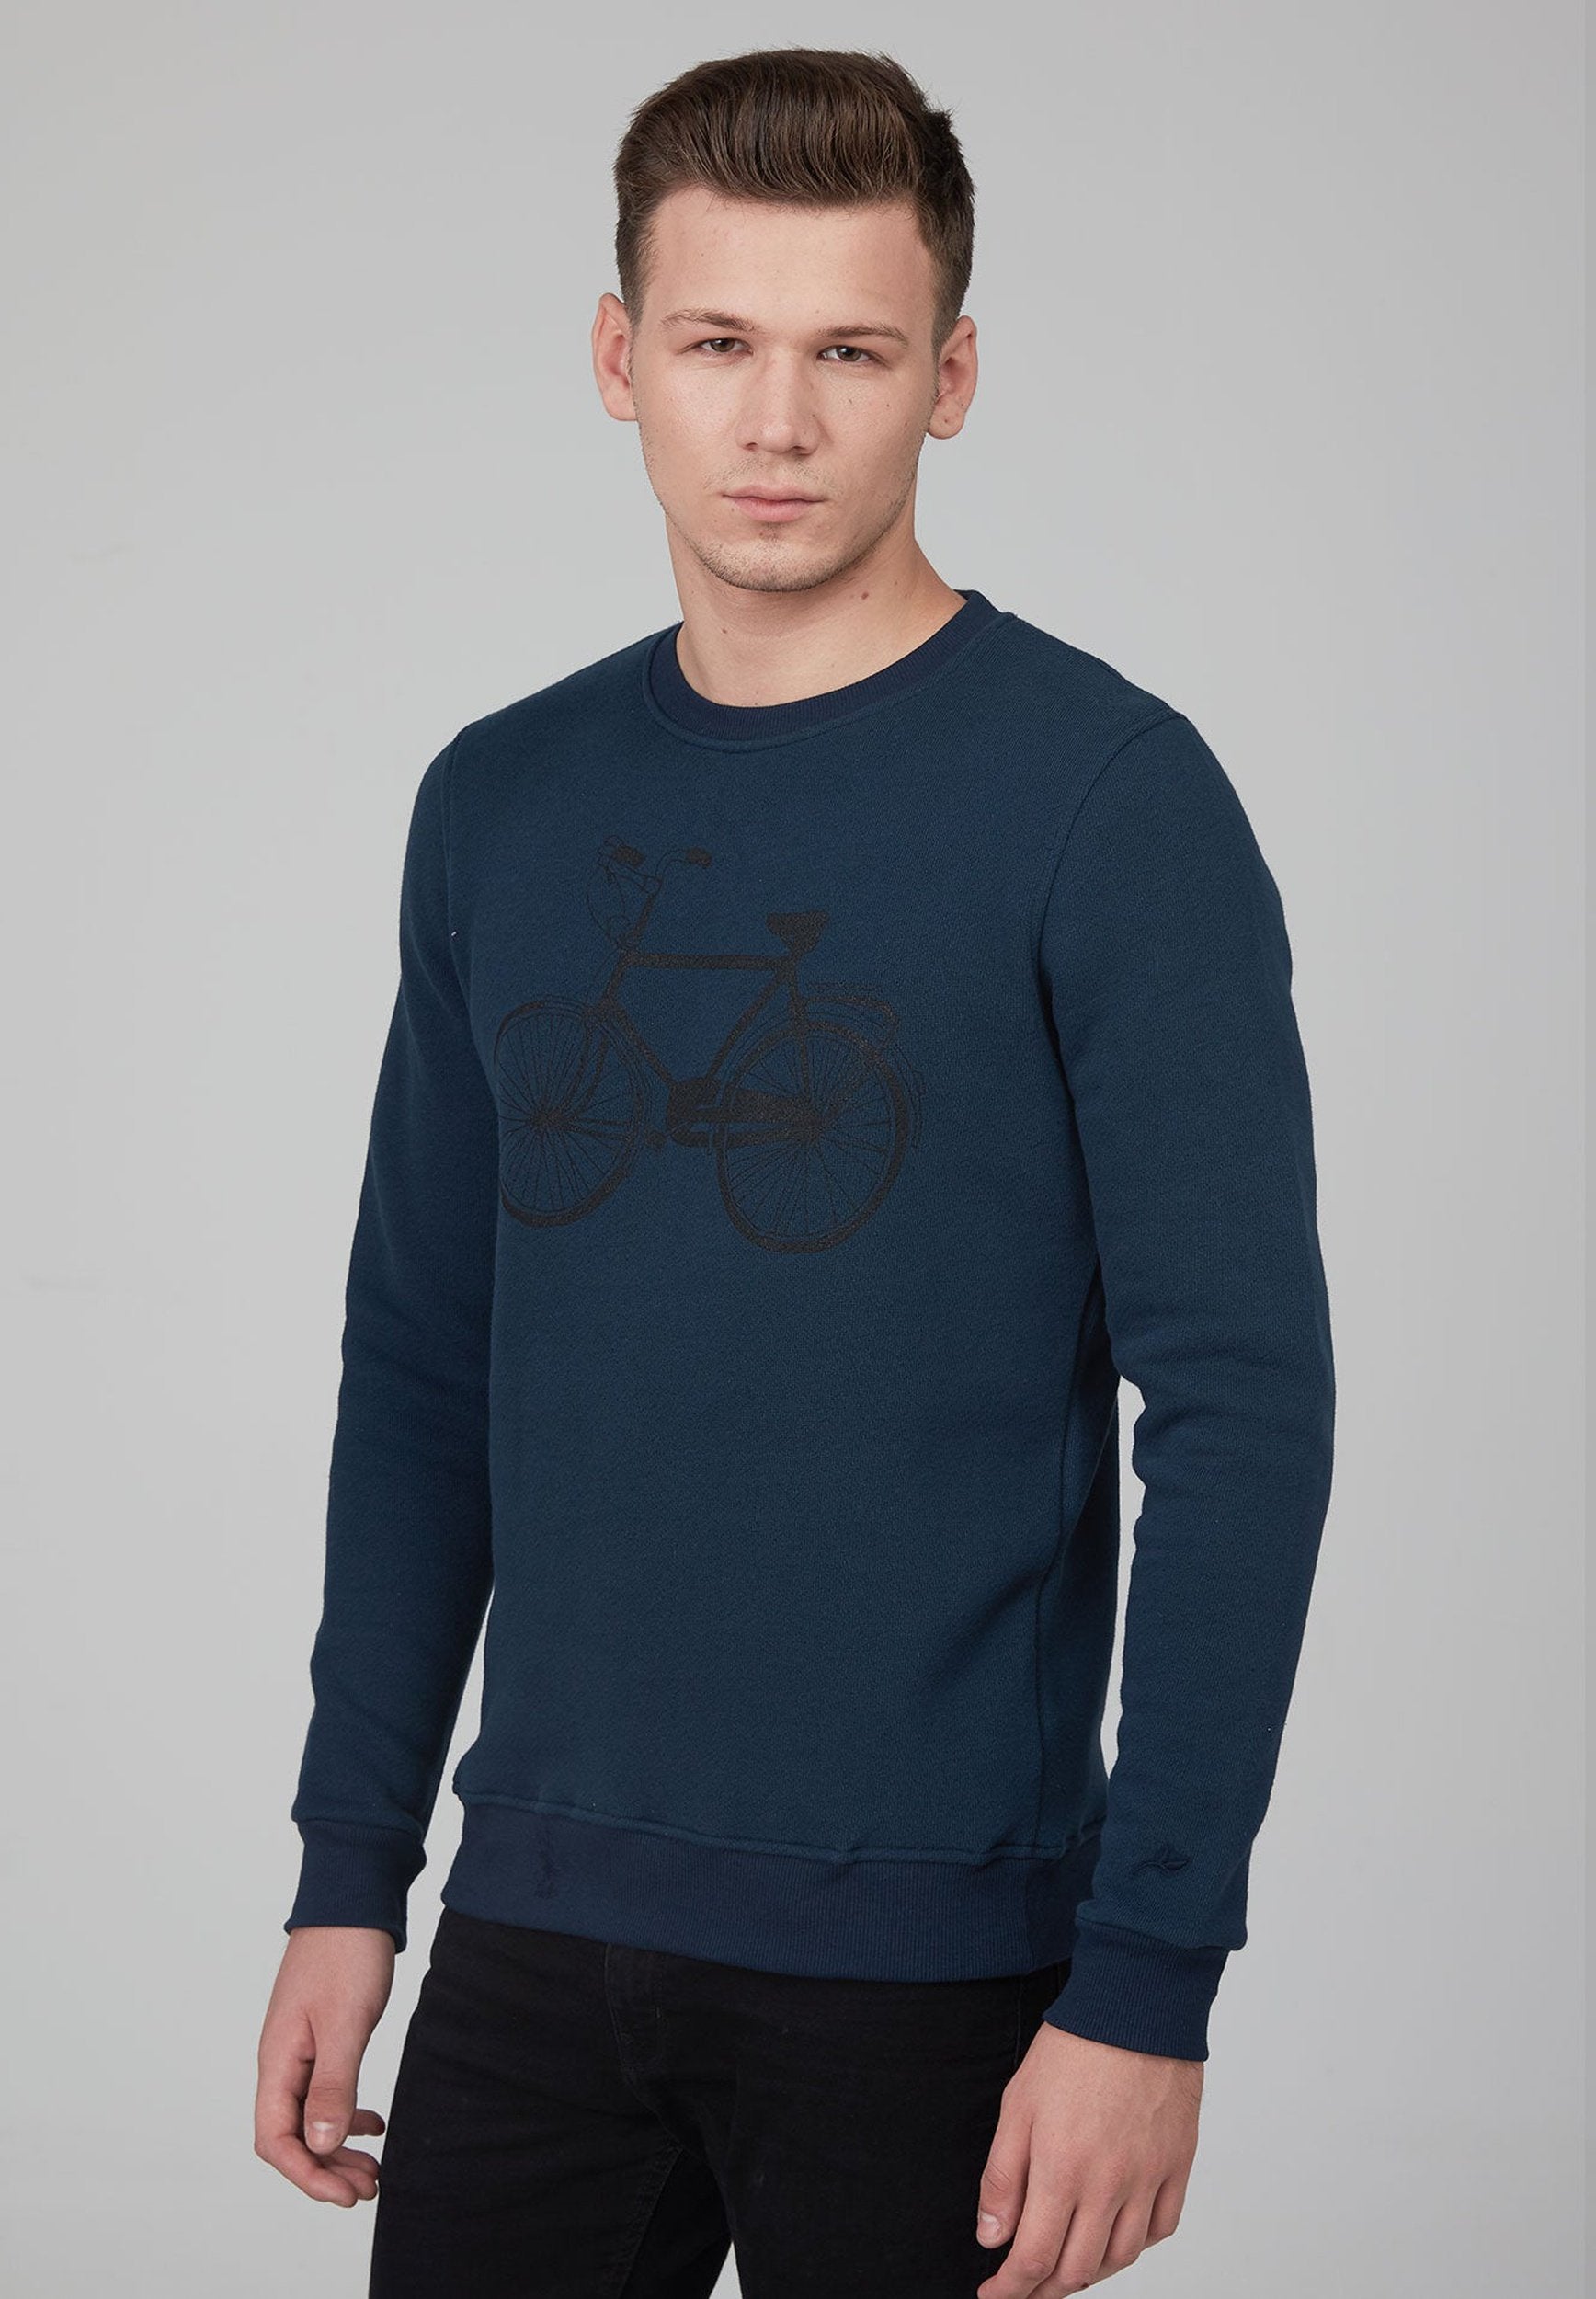 Langarm Basic Sweatshirt aus Bio-Baumwolle